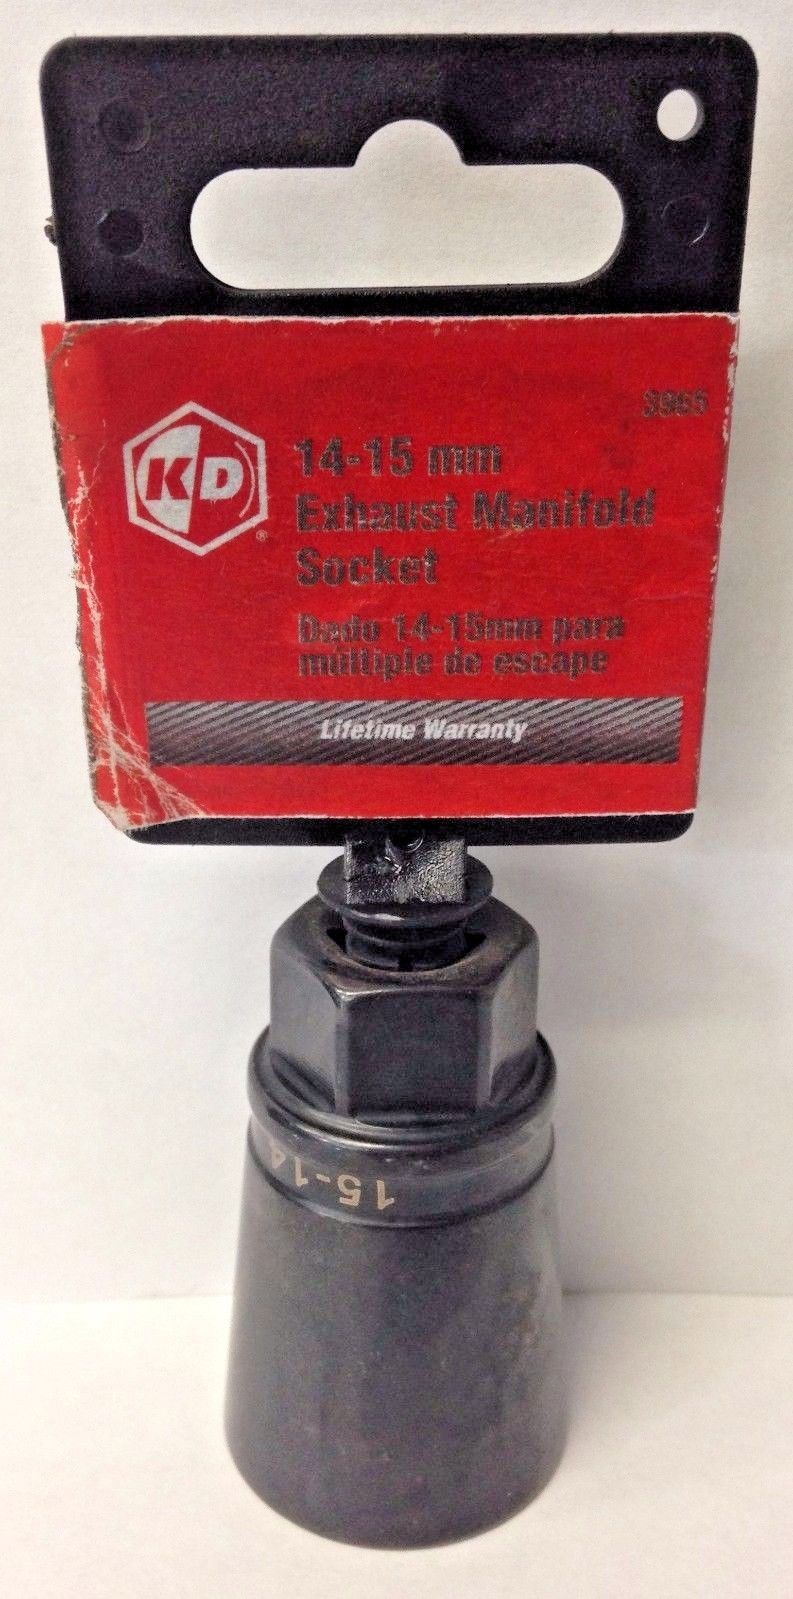 KD Tools 3965 14-15 mm Exhaust Manifold Socket